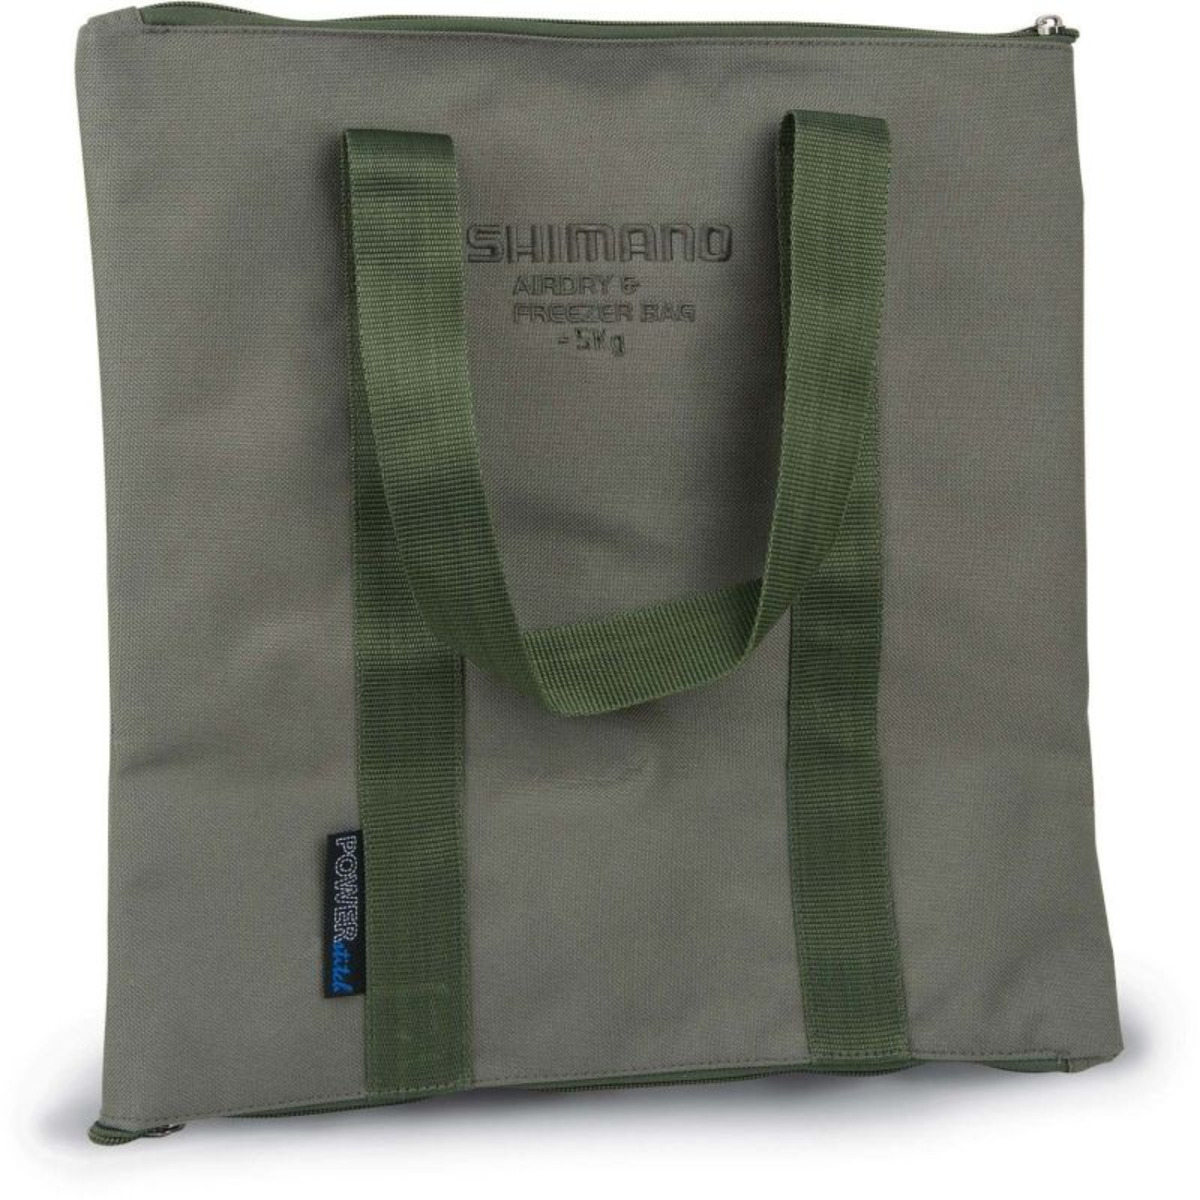 Shimano Olive Carp Luggage - 30 cm x 36 cm - small - 5 kg